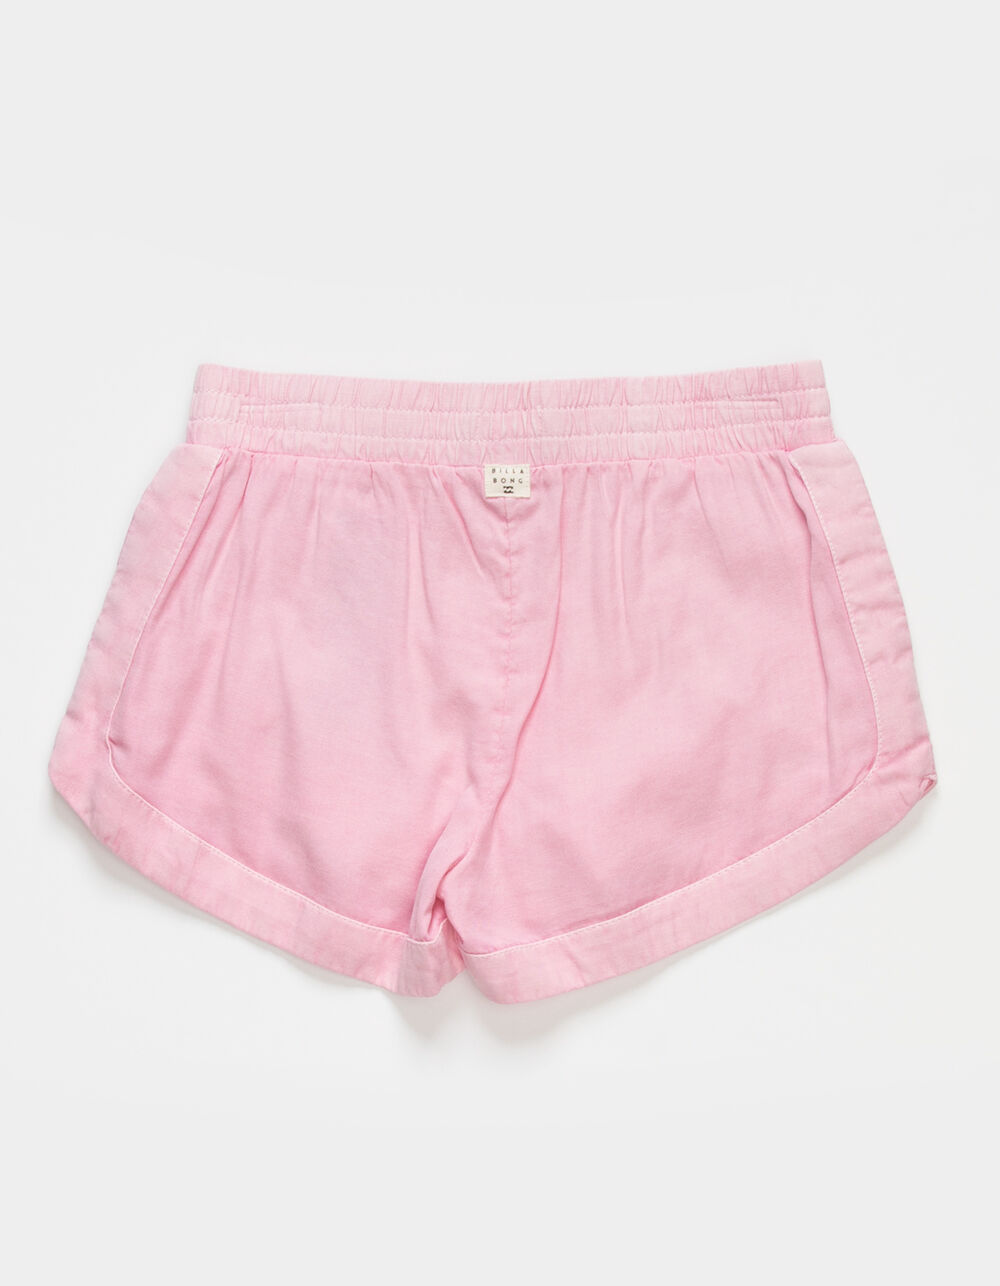 BILLABONG Mad For You Girls Shorts - PINK | Tillys